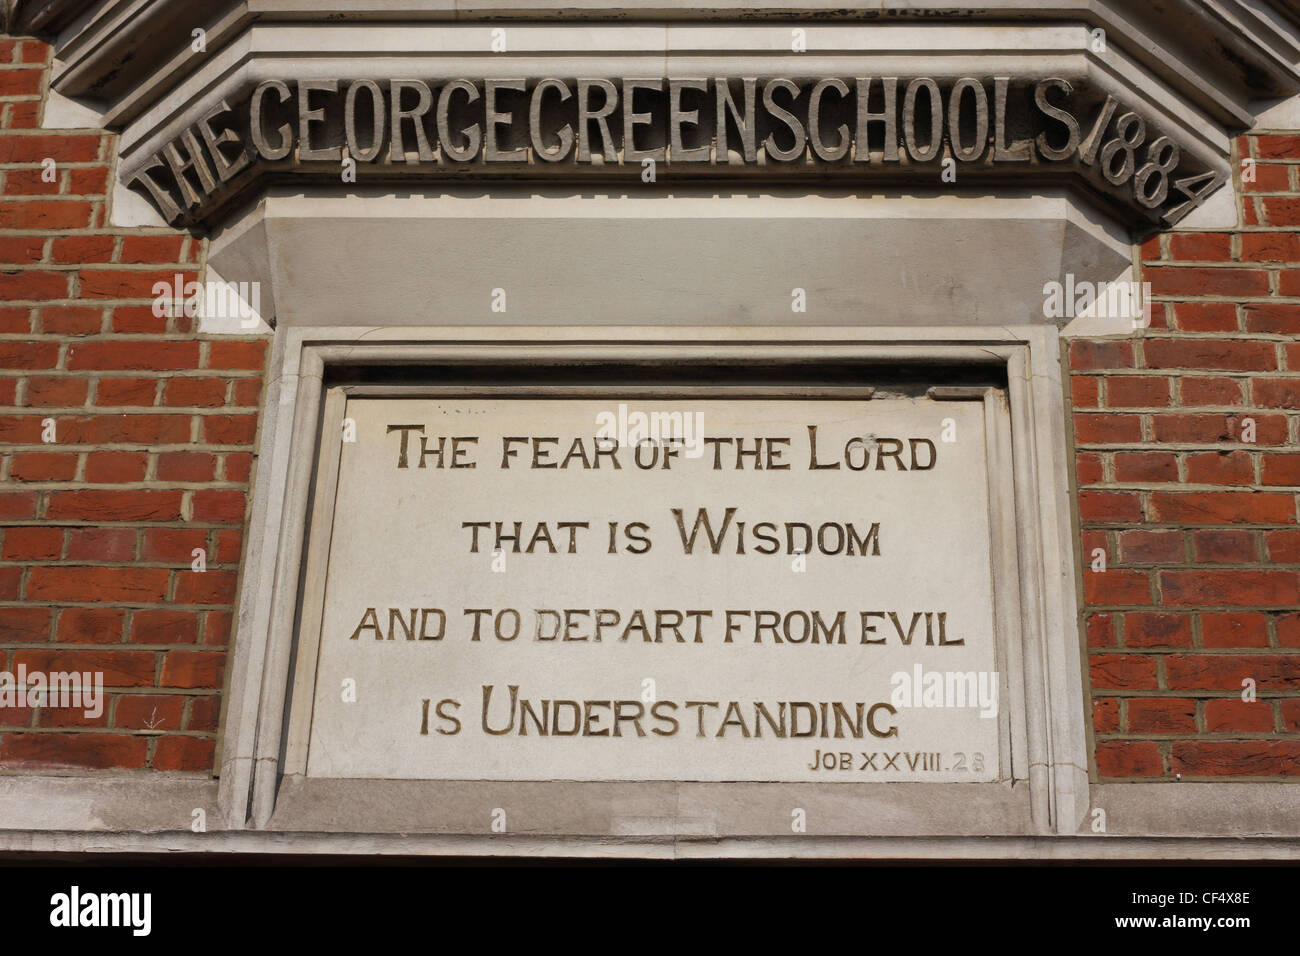 George Green School, Poplar, London Stock Photo